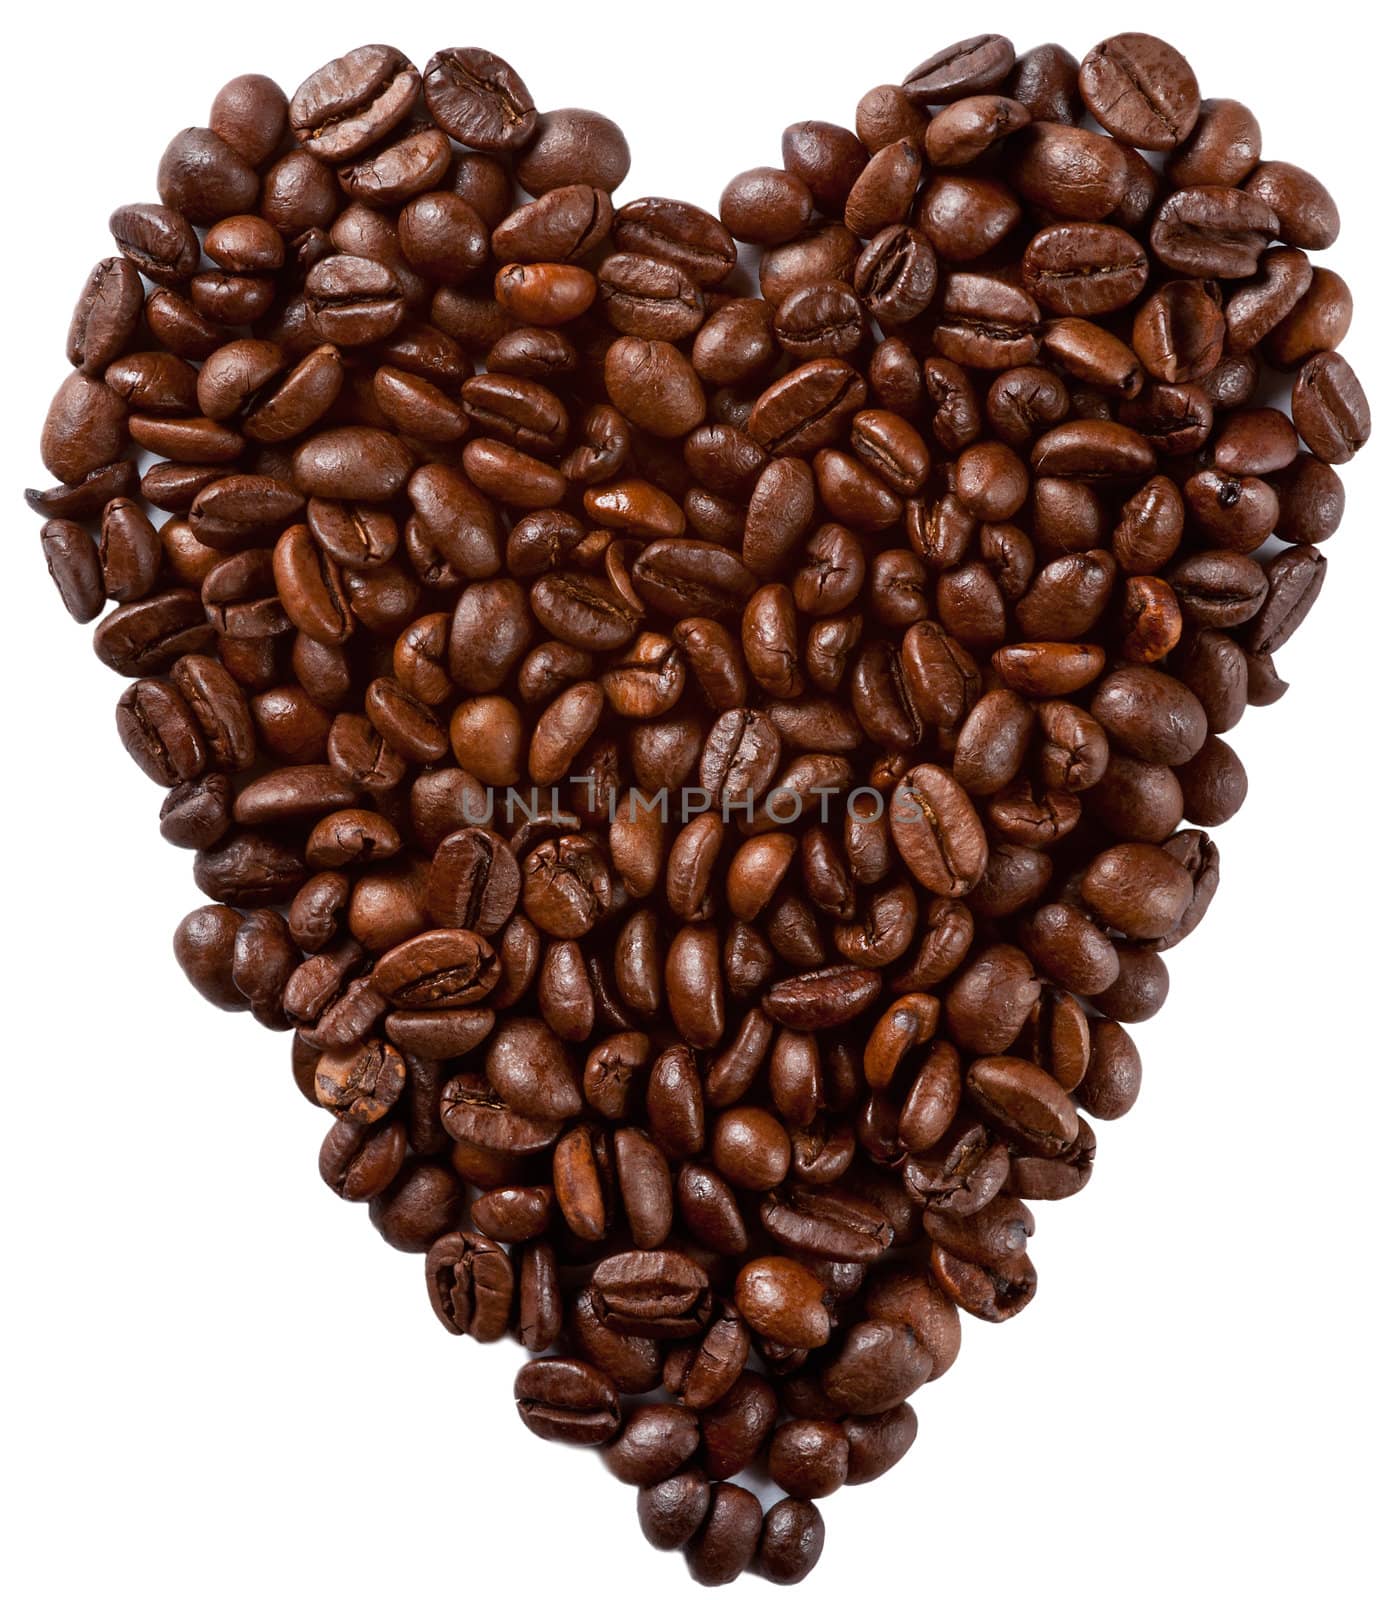 Heart Shaped Coffee by ruigsantos